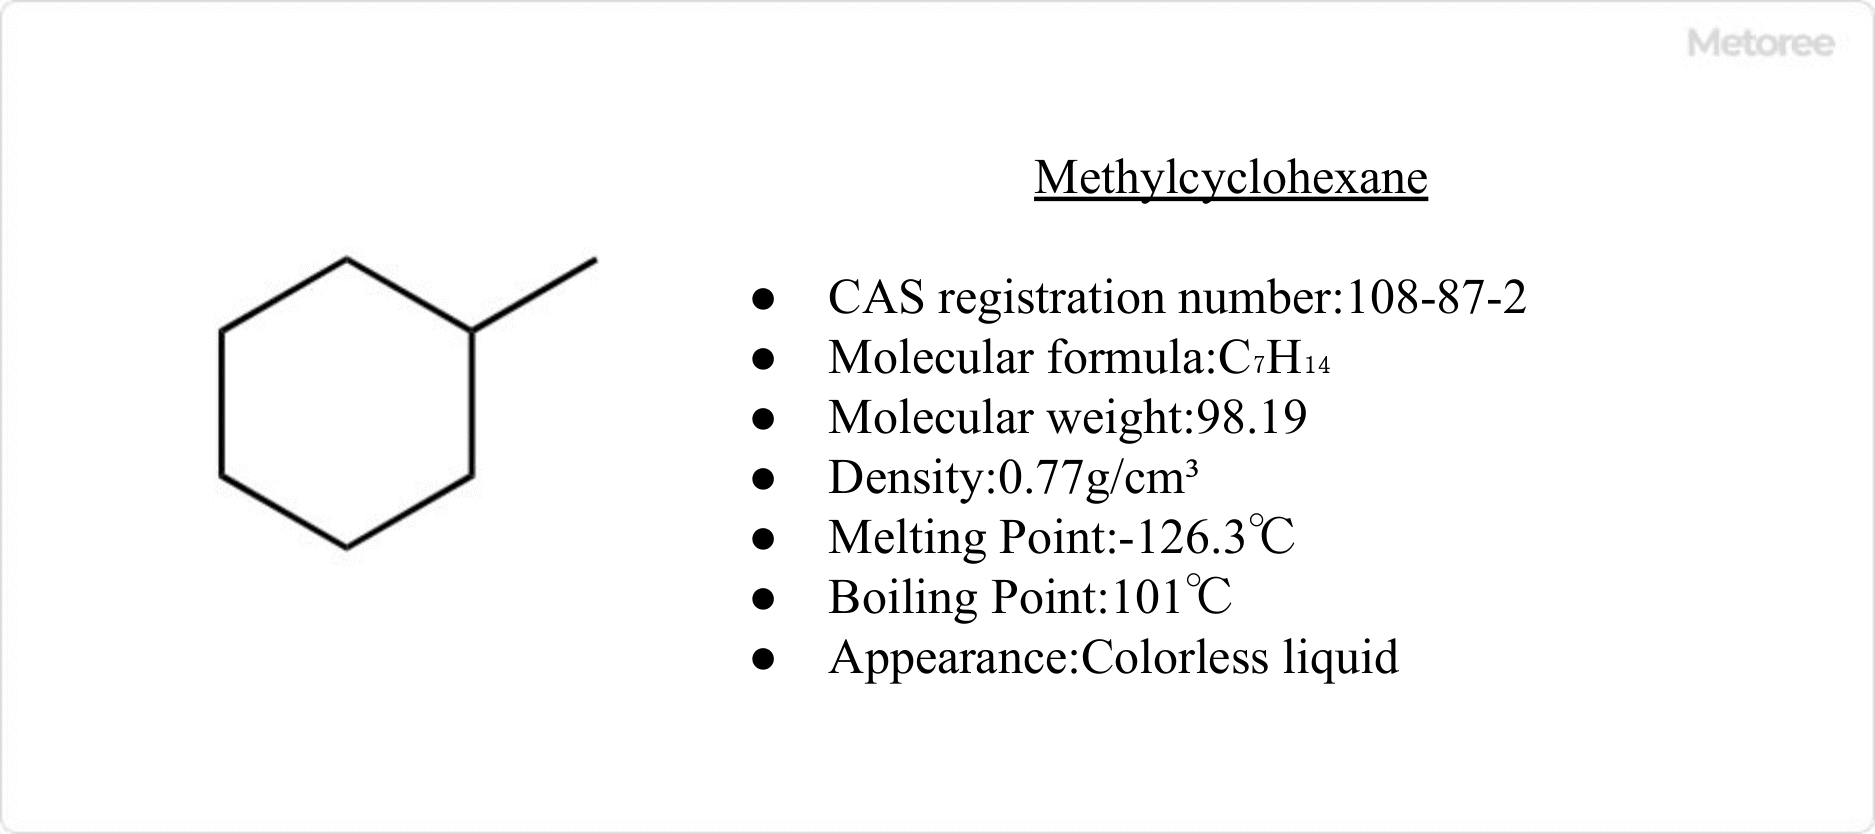 Figure 1. Basic information on methylcyclohexane